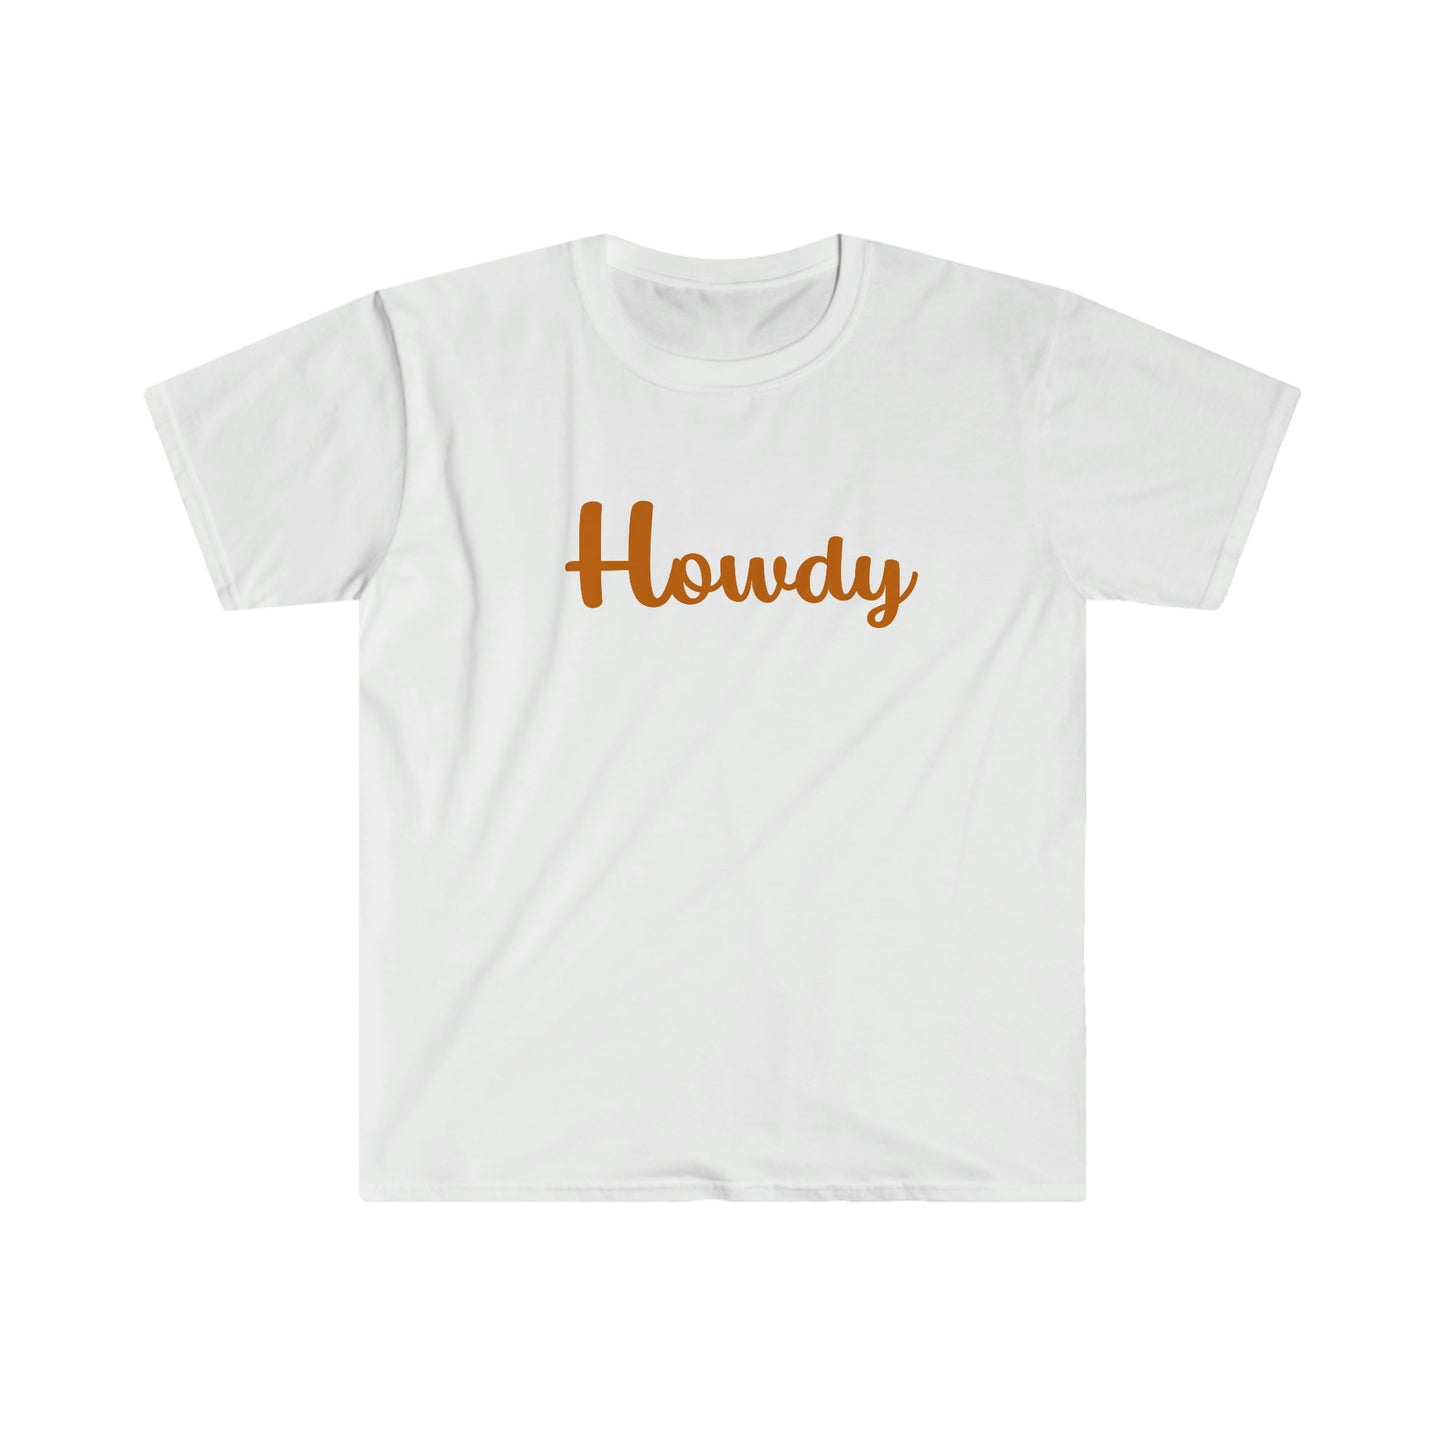 Howdy - Austin T-Shirt